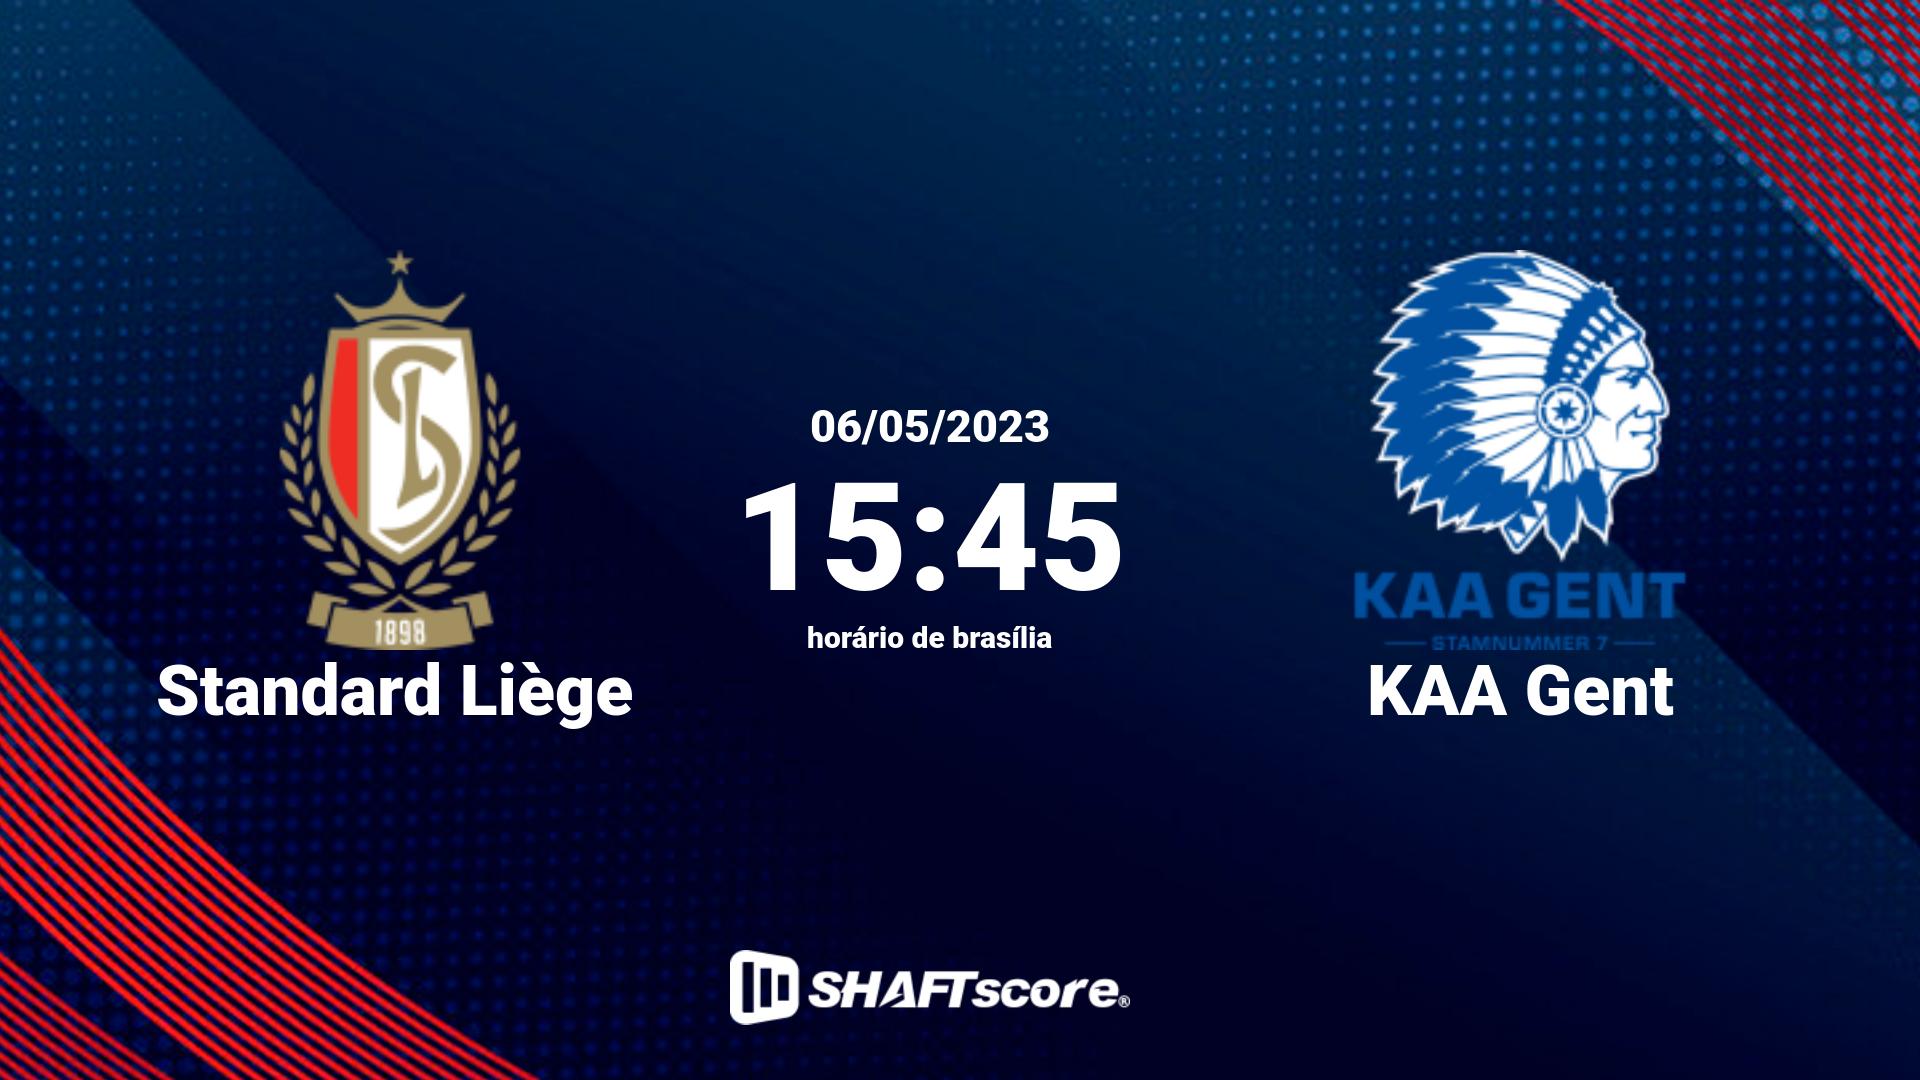 Estatísticas do jogo Standard Liège vs KAA Gent 06.05 15:45